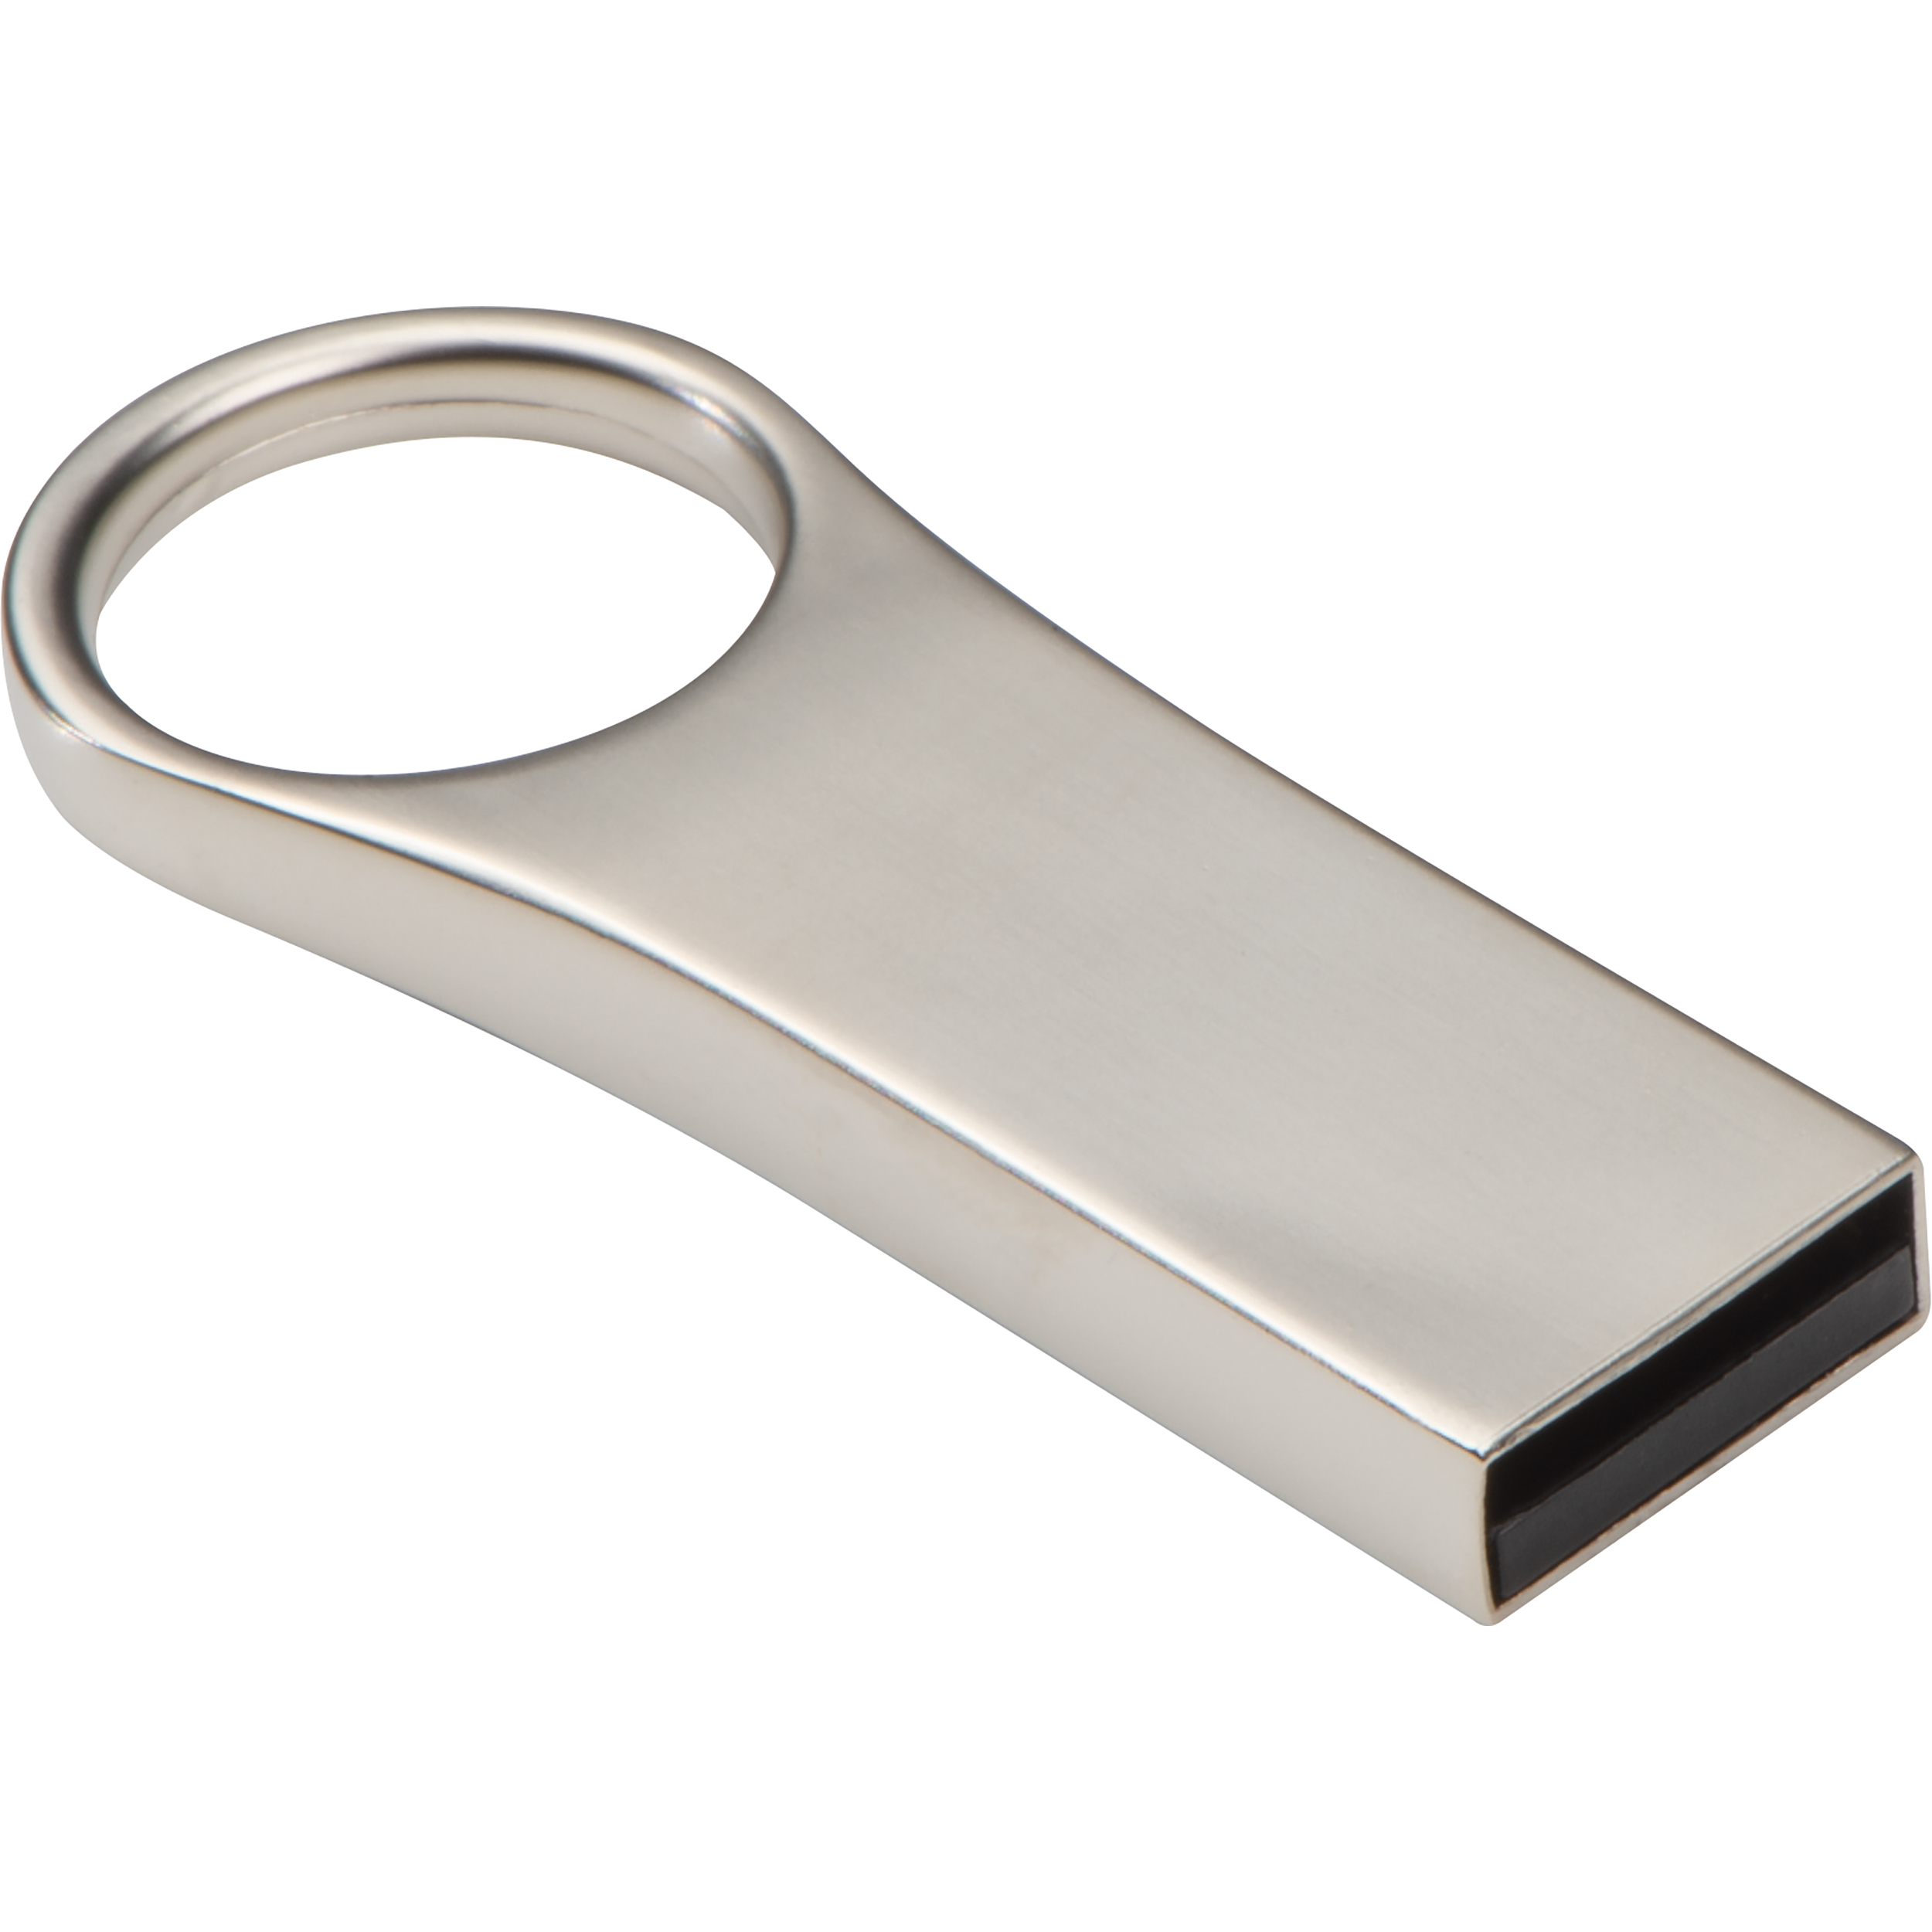 USB Stick aus Metall 8GB